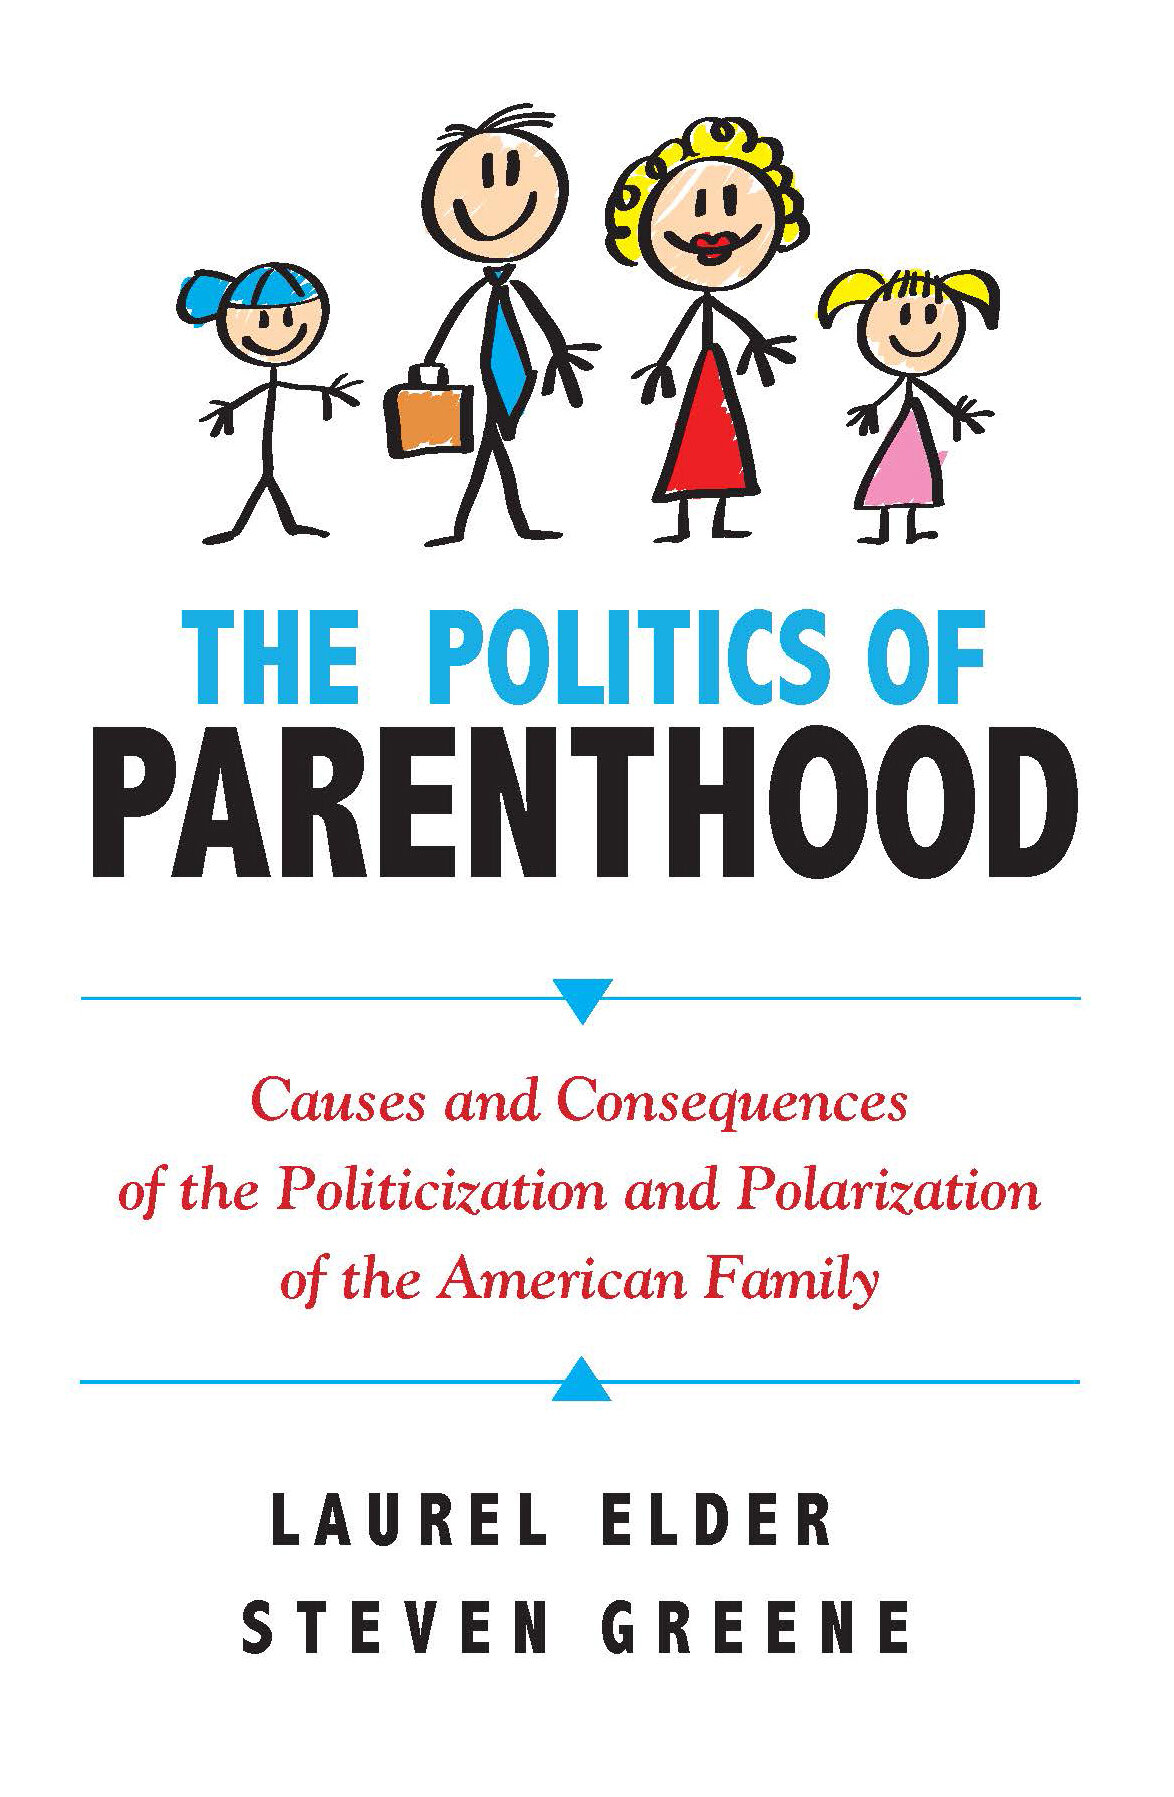 The Politics of Parenthood